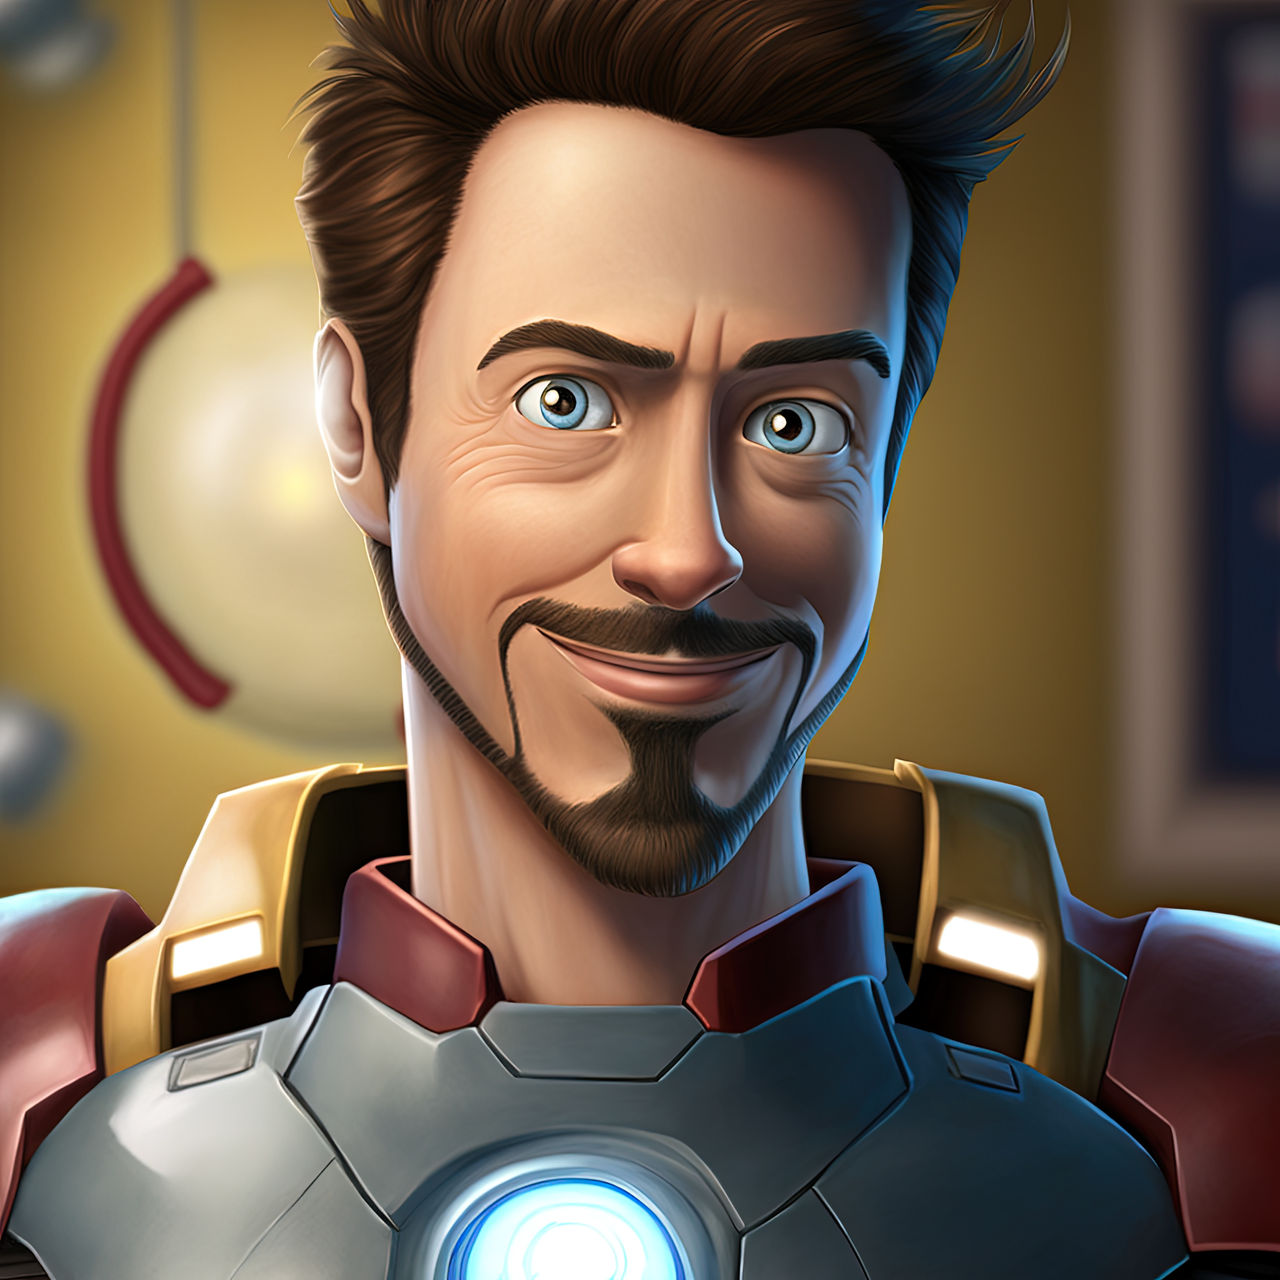 Tony Stark / Iron Man by Metzae on DeviantArt